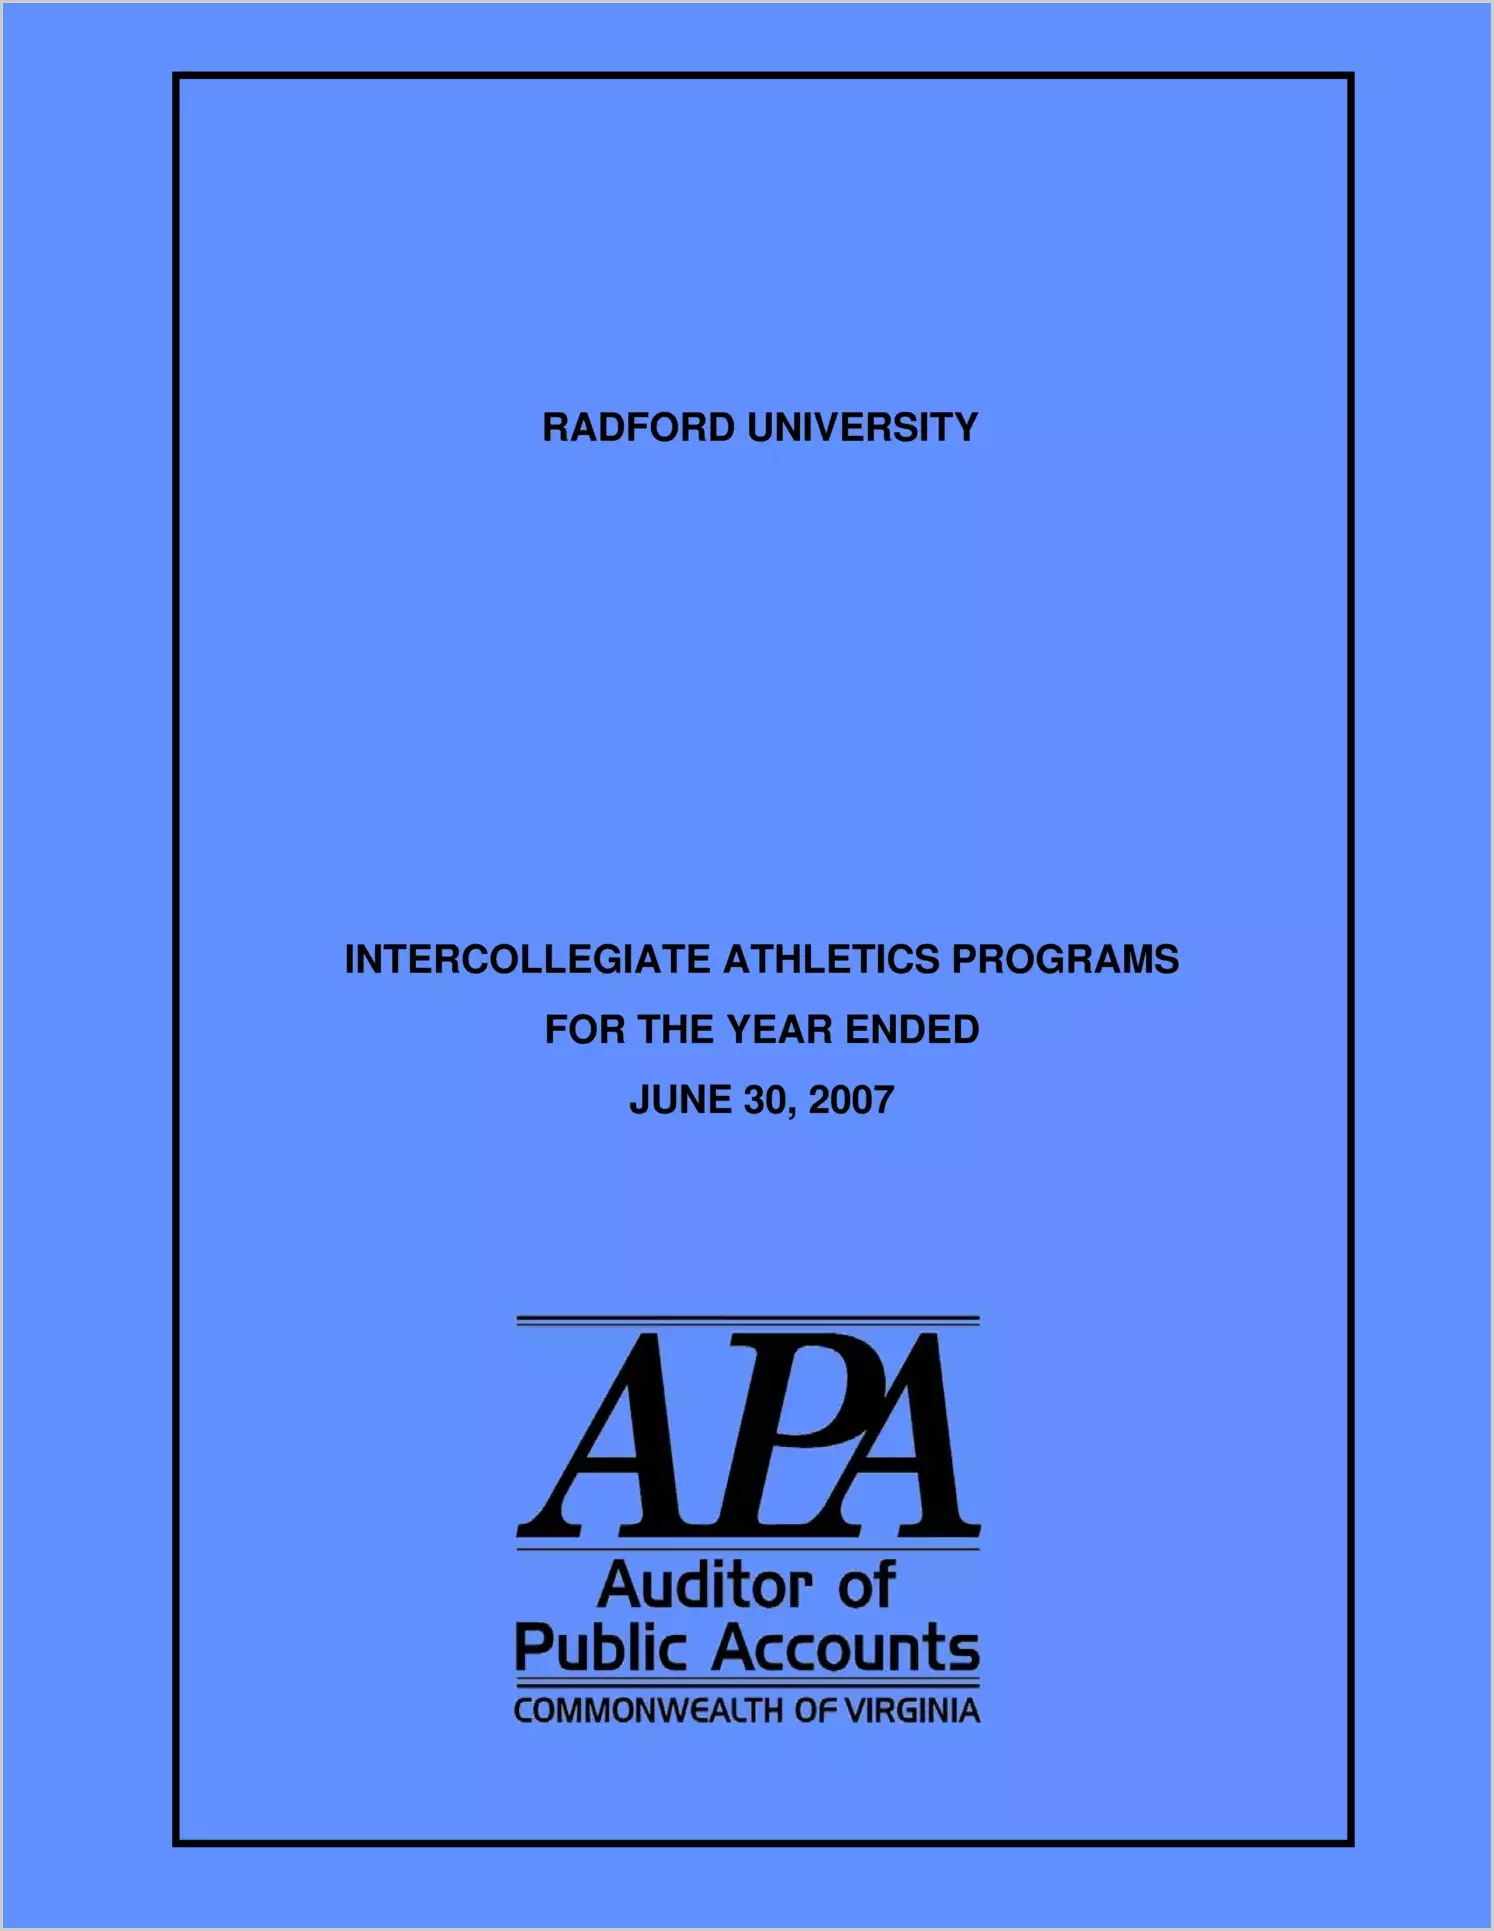 Radford University Intercollegiate Athletics Programs for the year ended June 30, 2007